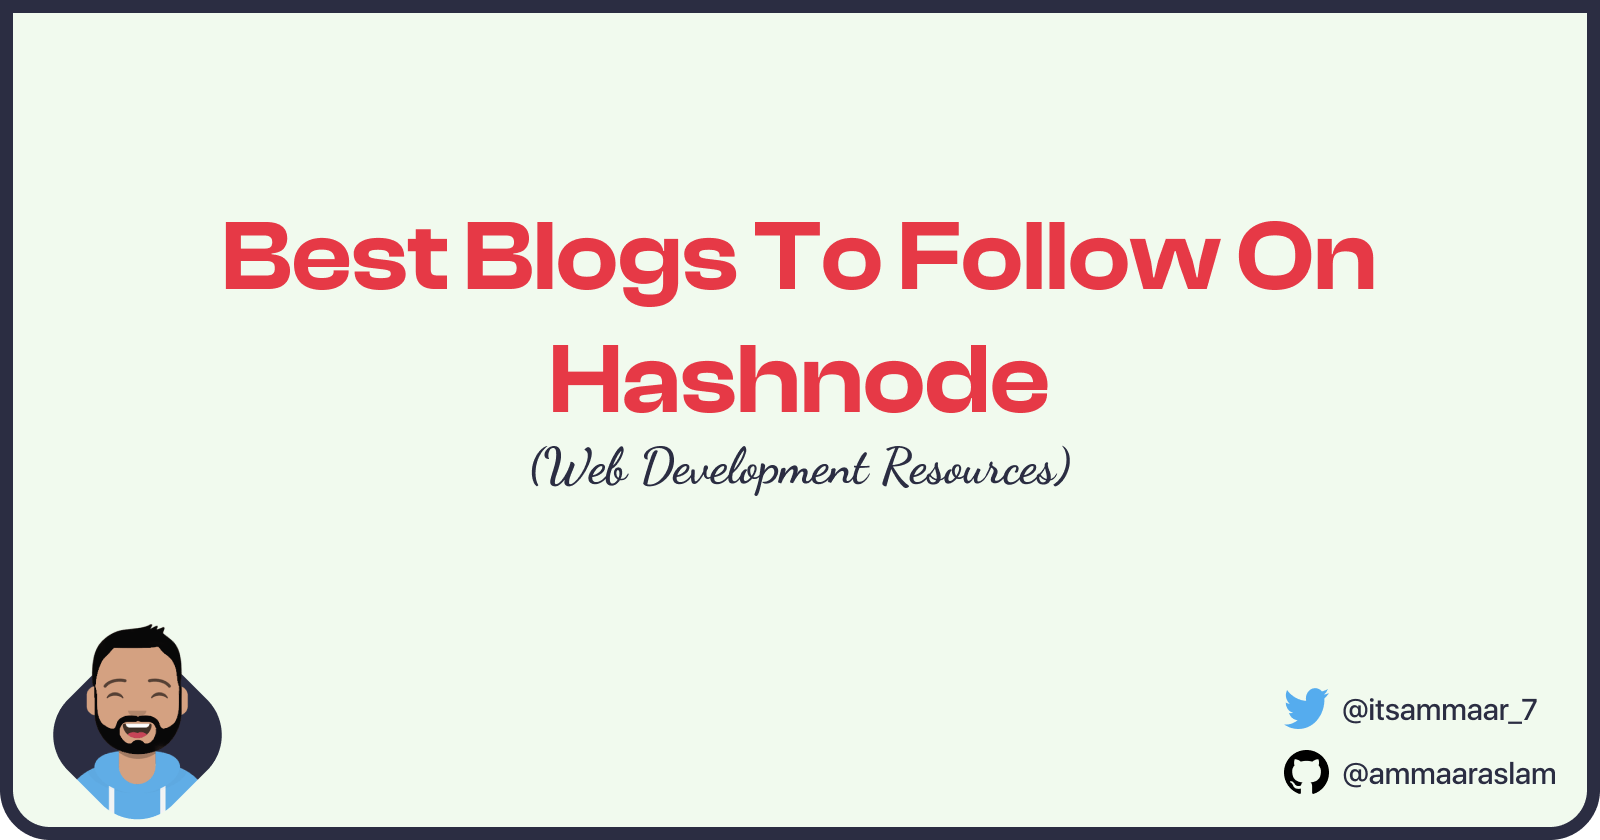 Best Blogs To Follow On Hashnode